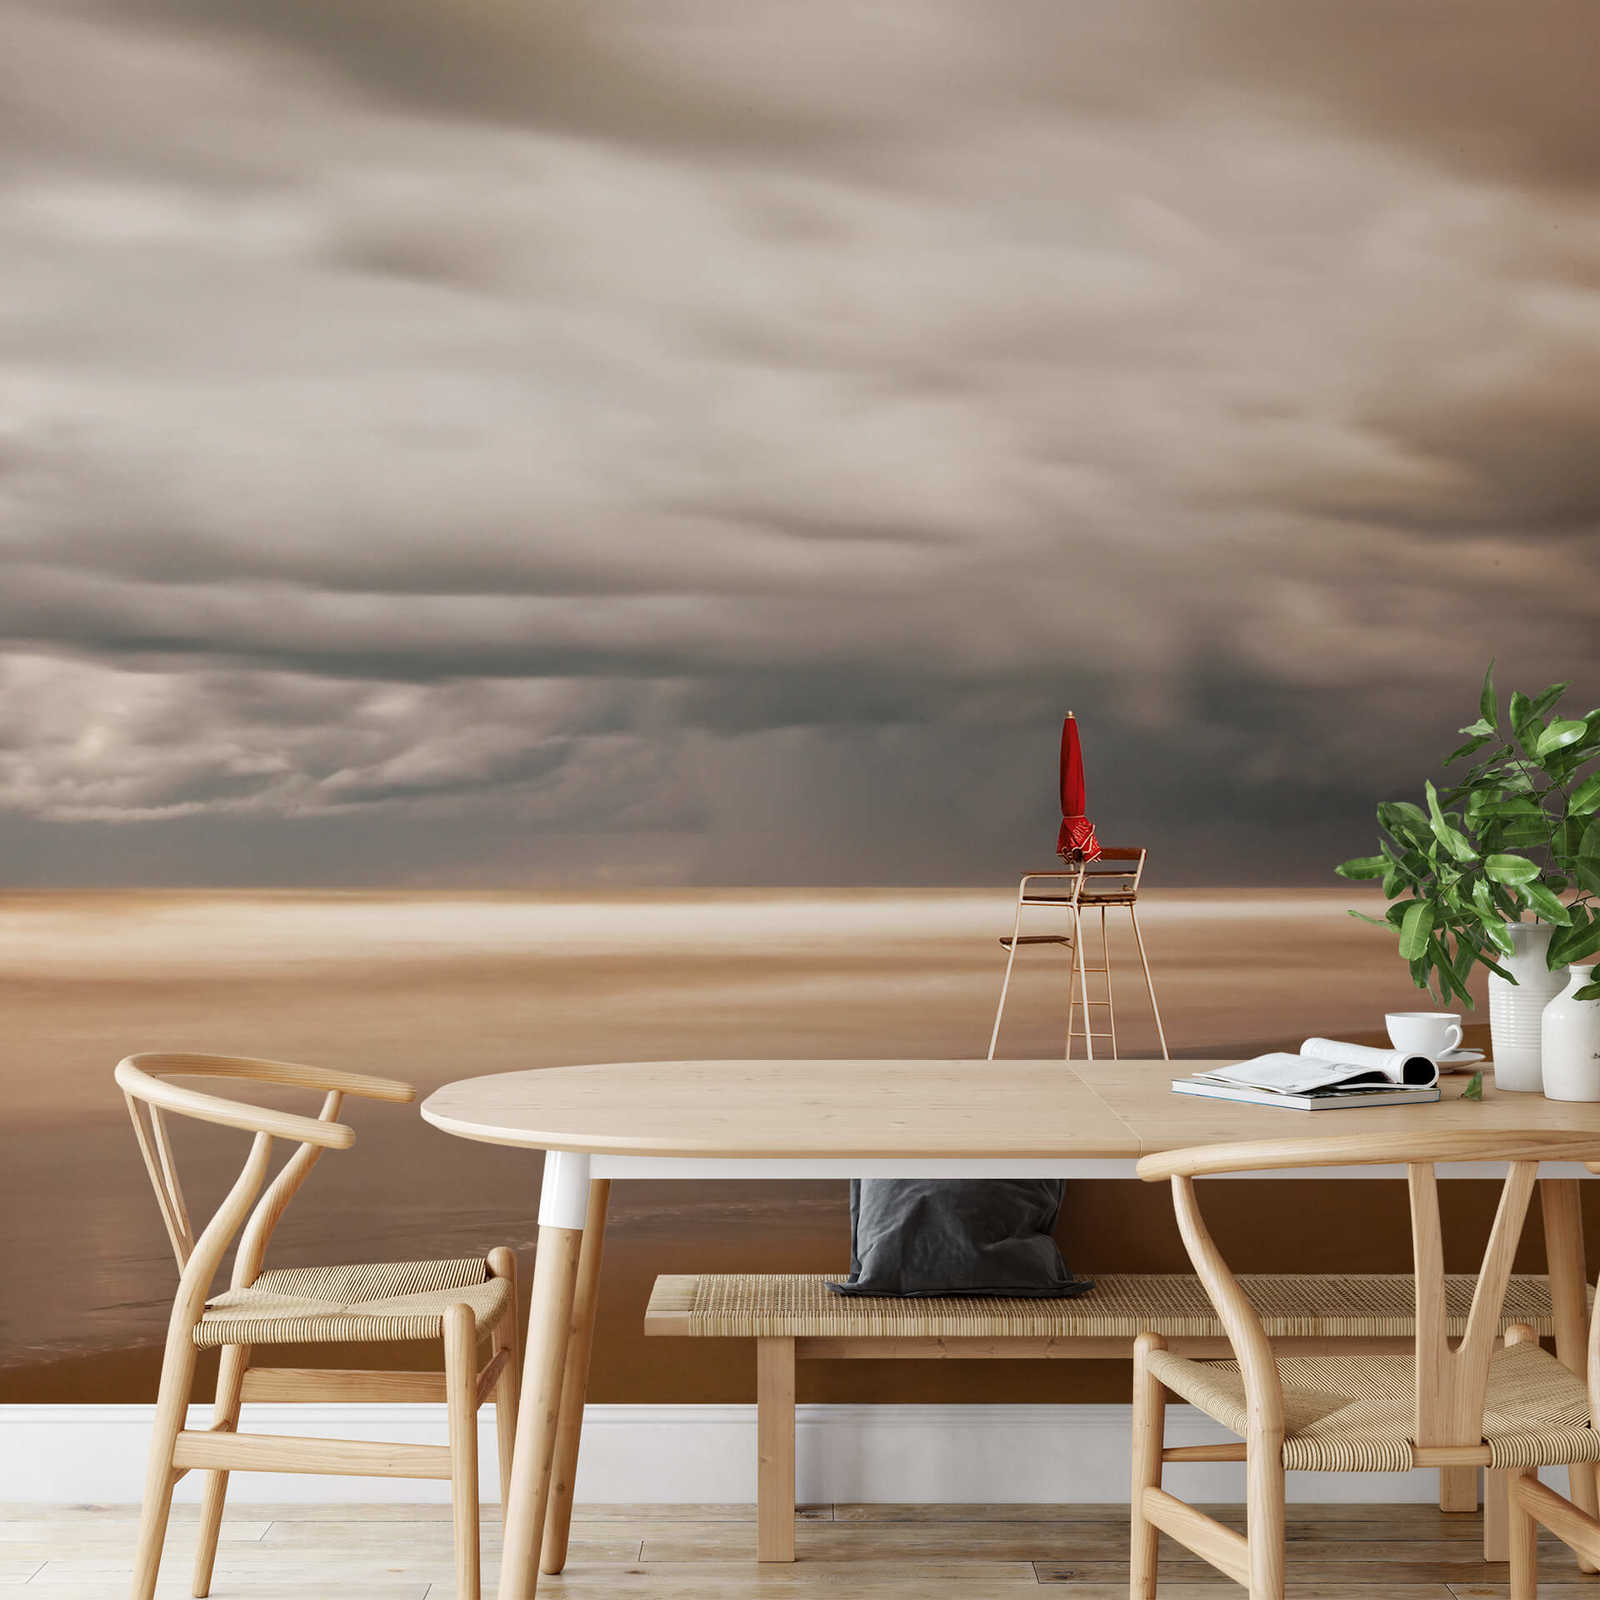             Photo wallpaper beach with chair - cream, grey
        